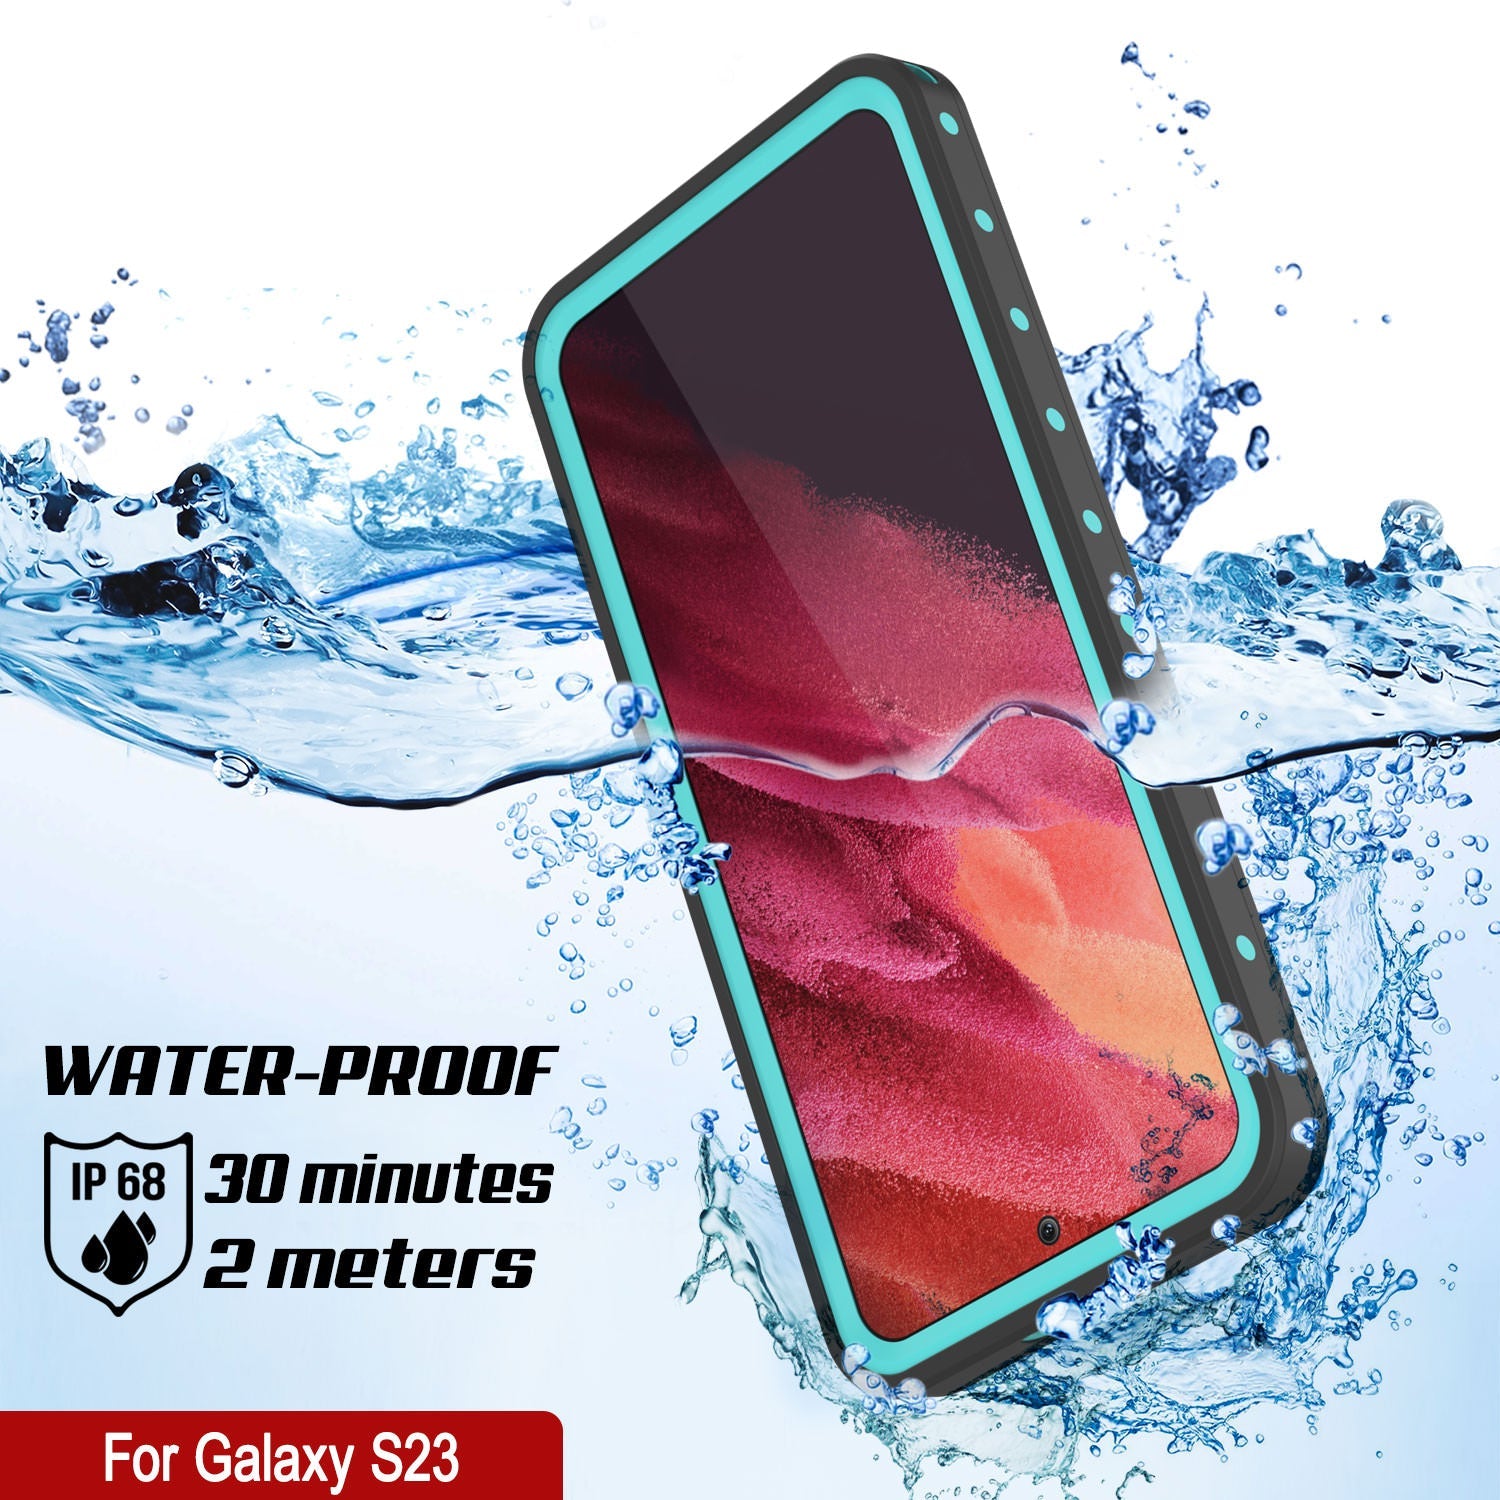 Galaxy S24 Waterproof Case PunkCase StudStar Teal Thin 6.2ft Underwater IP68 Shock/Snow Proof